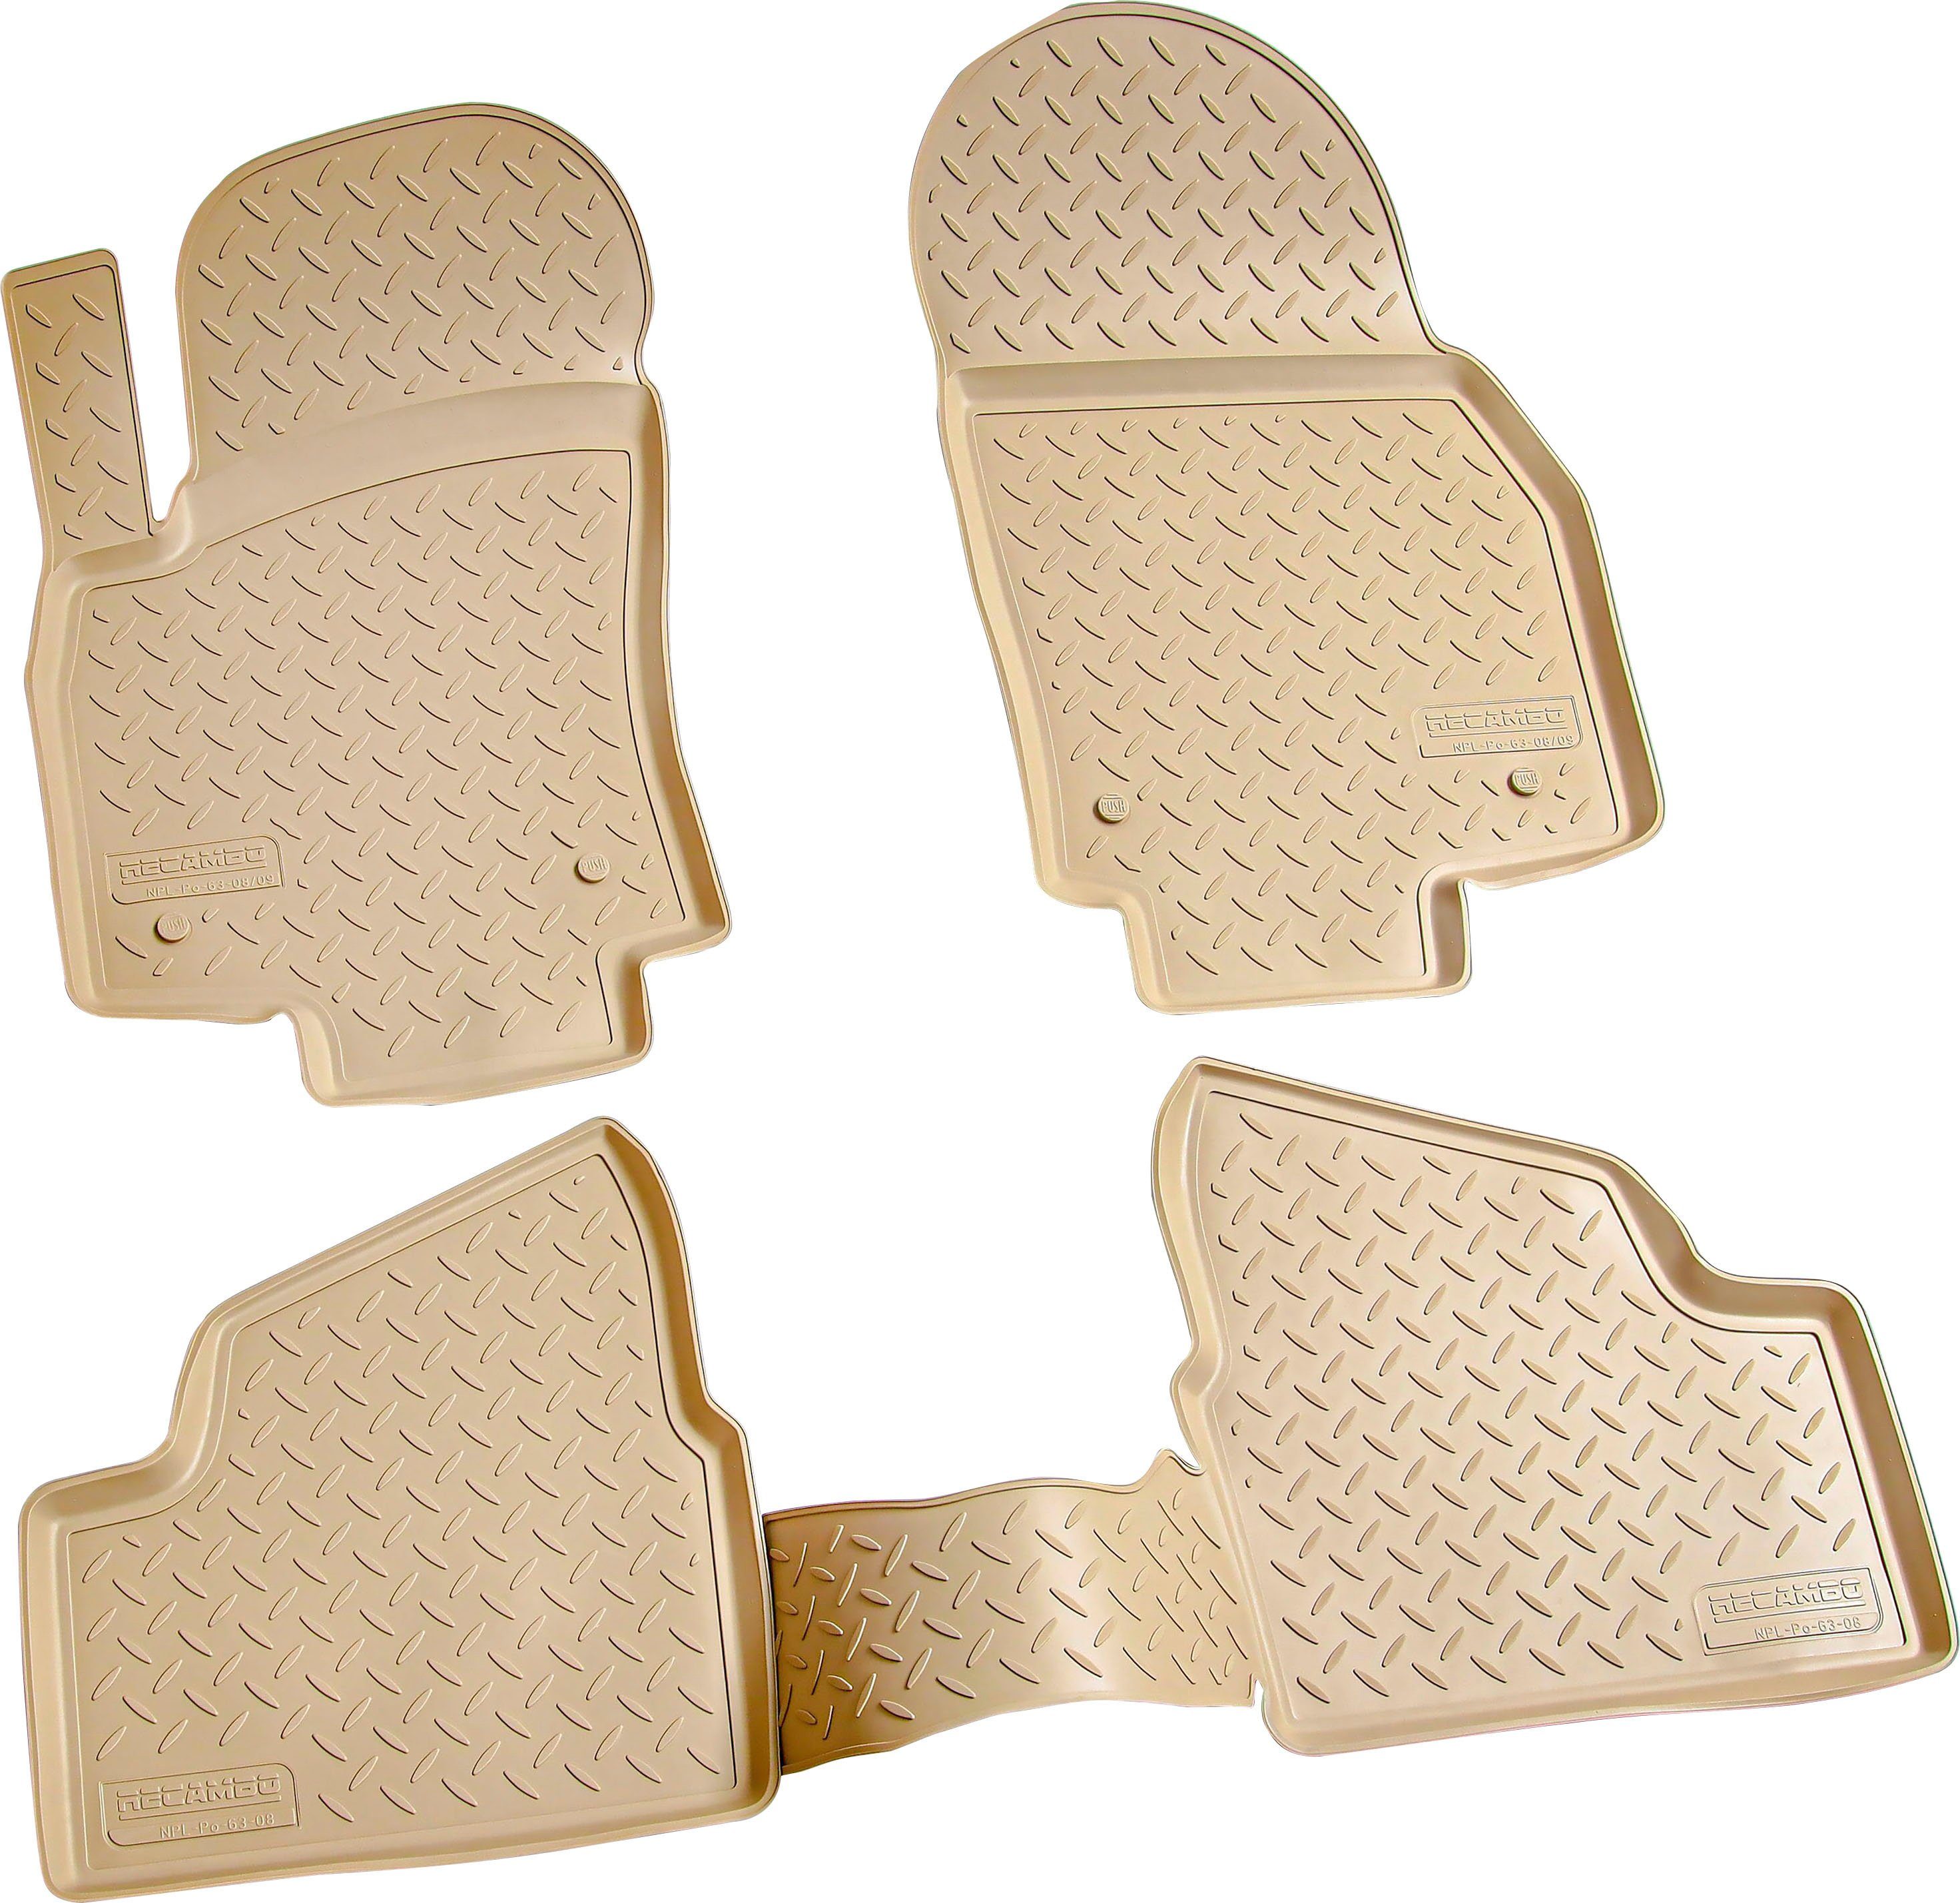 2014, Astra, (4 St), 2004 Passform-Fußmatten Passform CustomComforts - H OPEL RECAMBO perfekte für